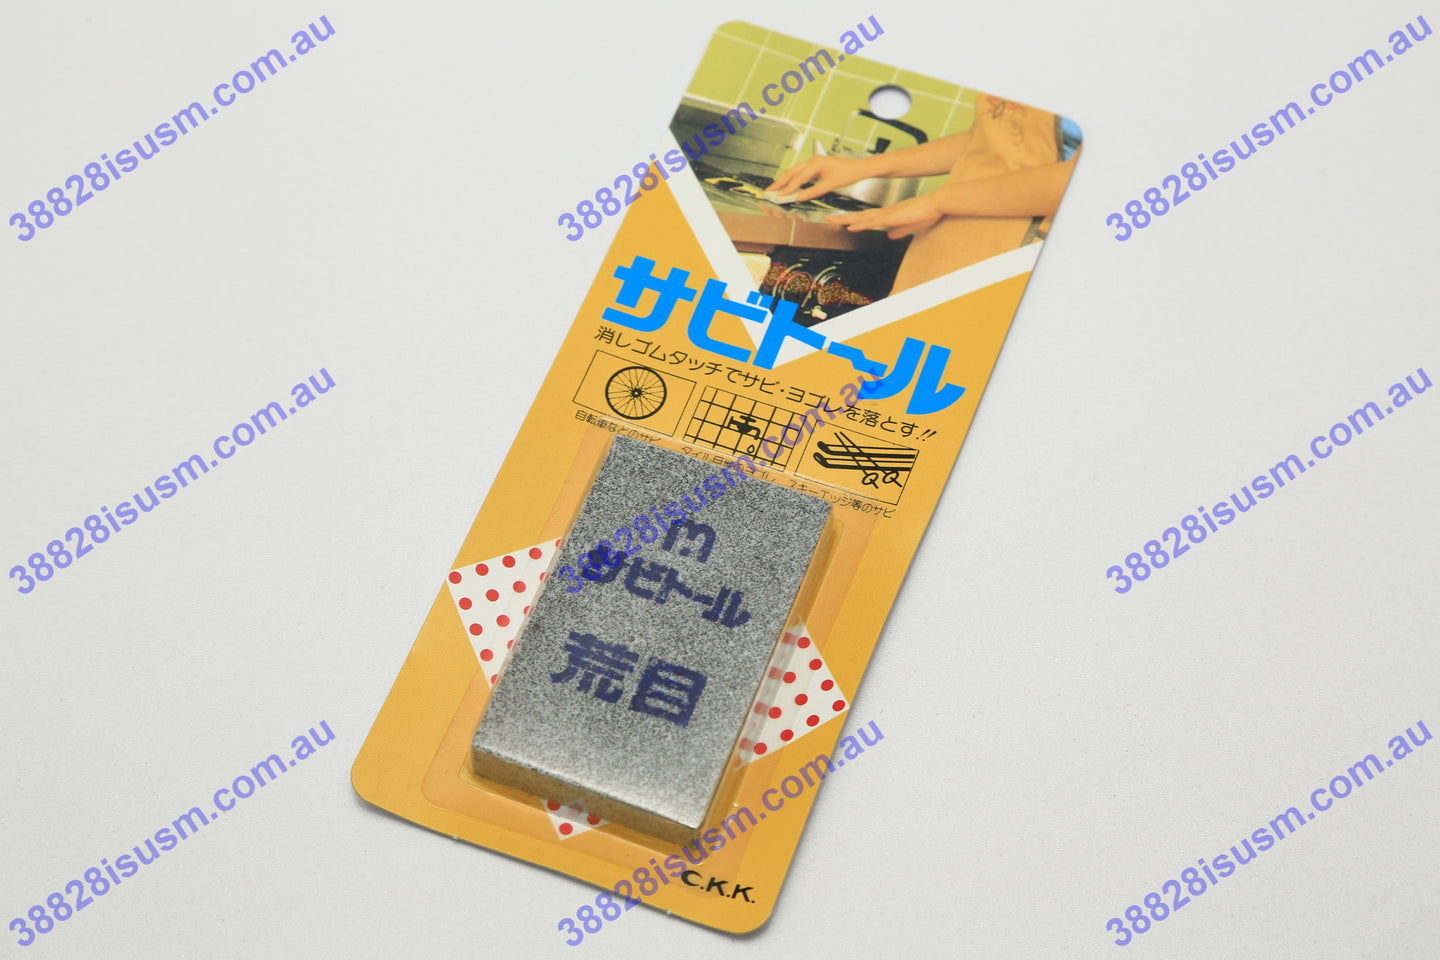 SABITORU Rust Eraser - Optional - Coarse/Medium/Fine or Combo Deal MADE IN JAPAN